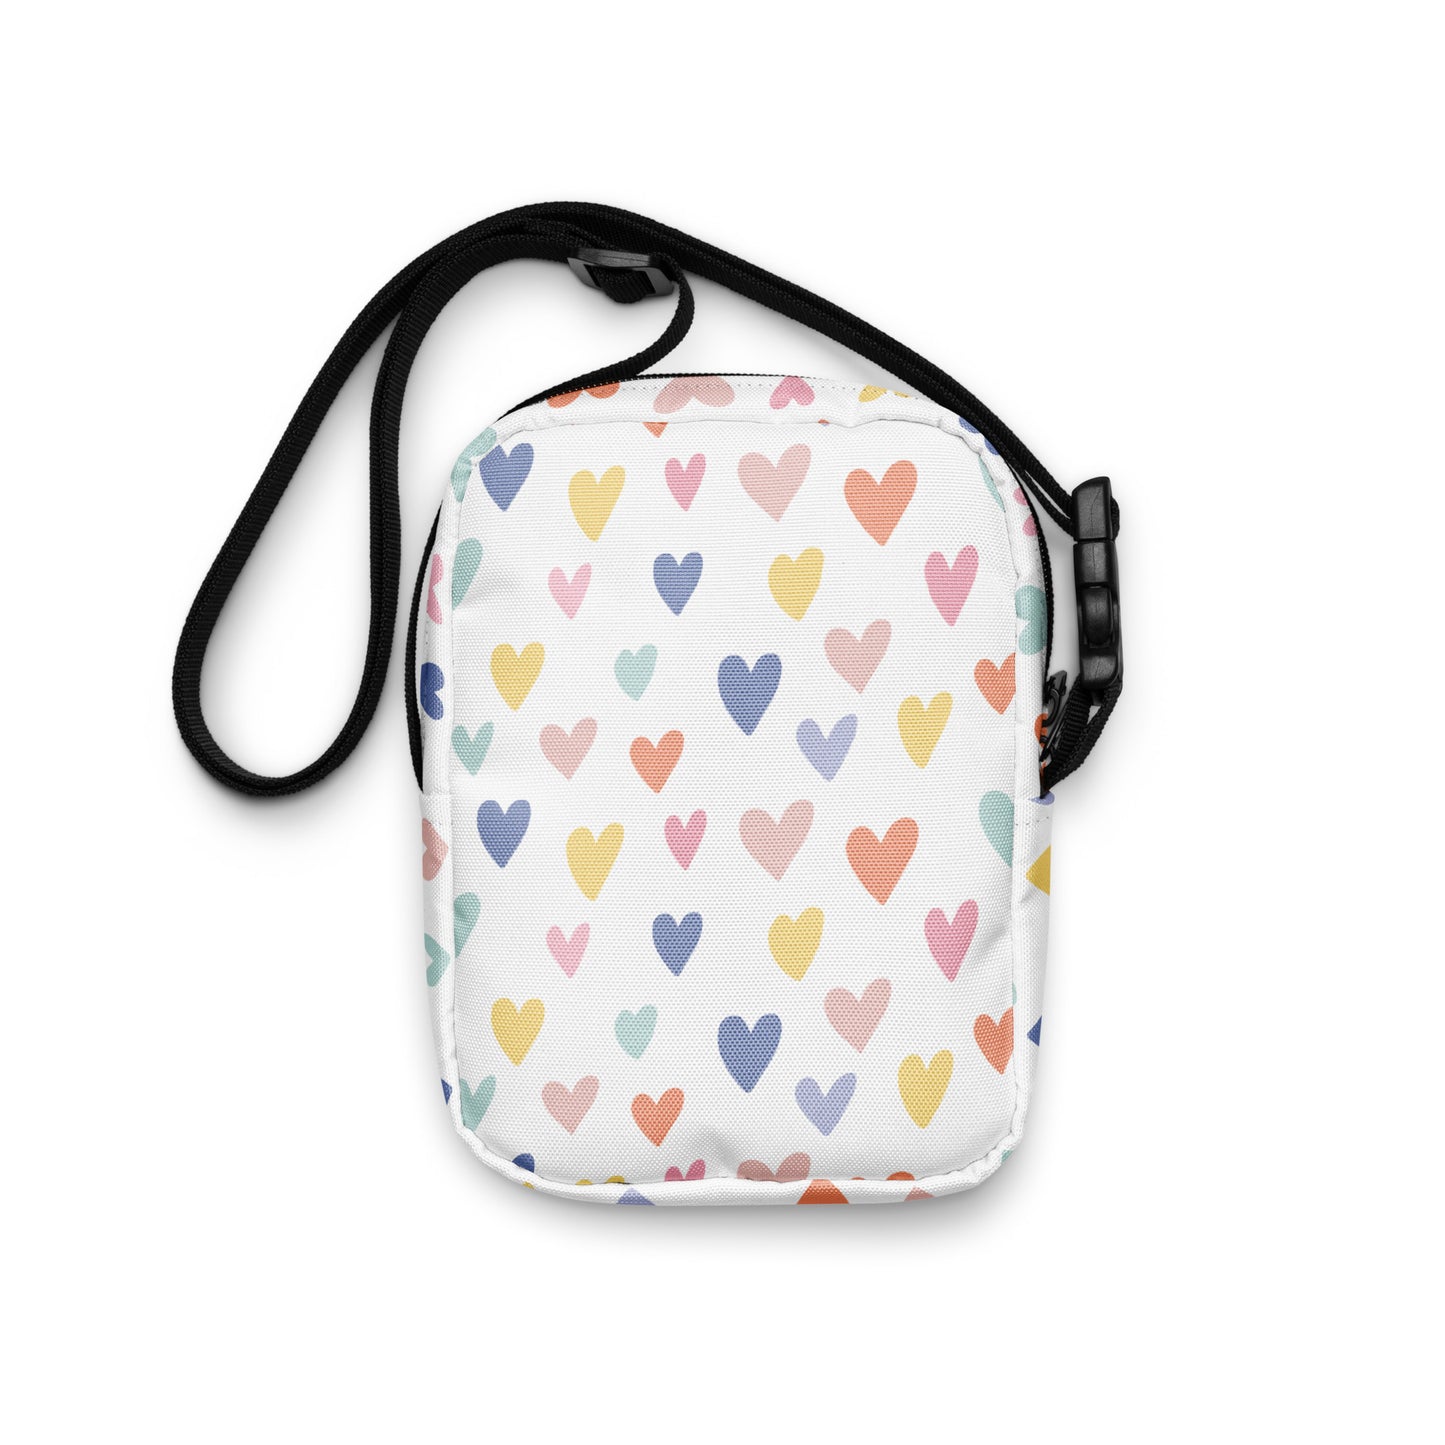 Hearts crossbody bag